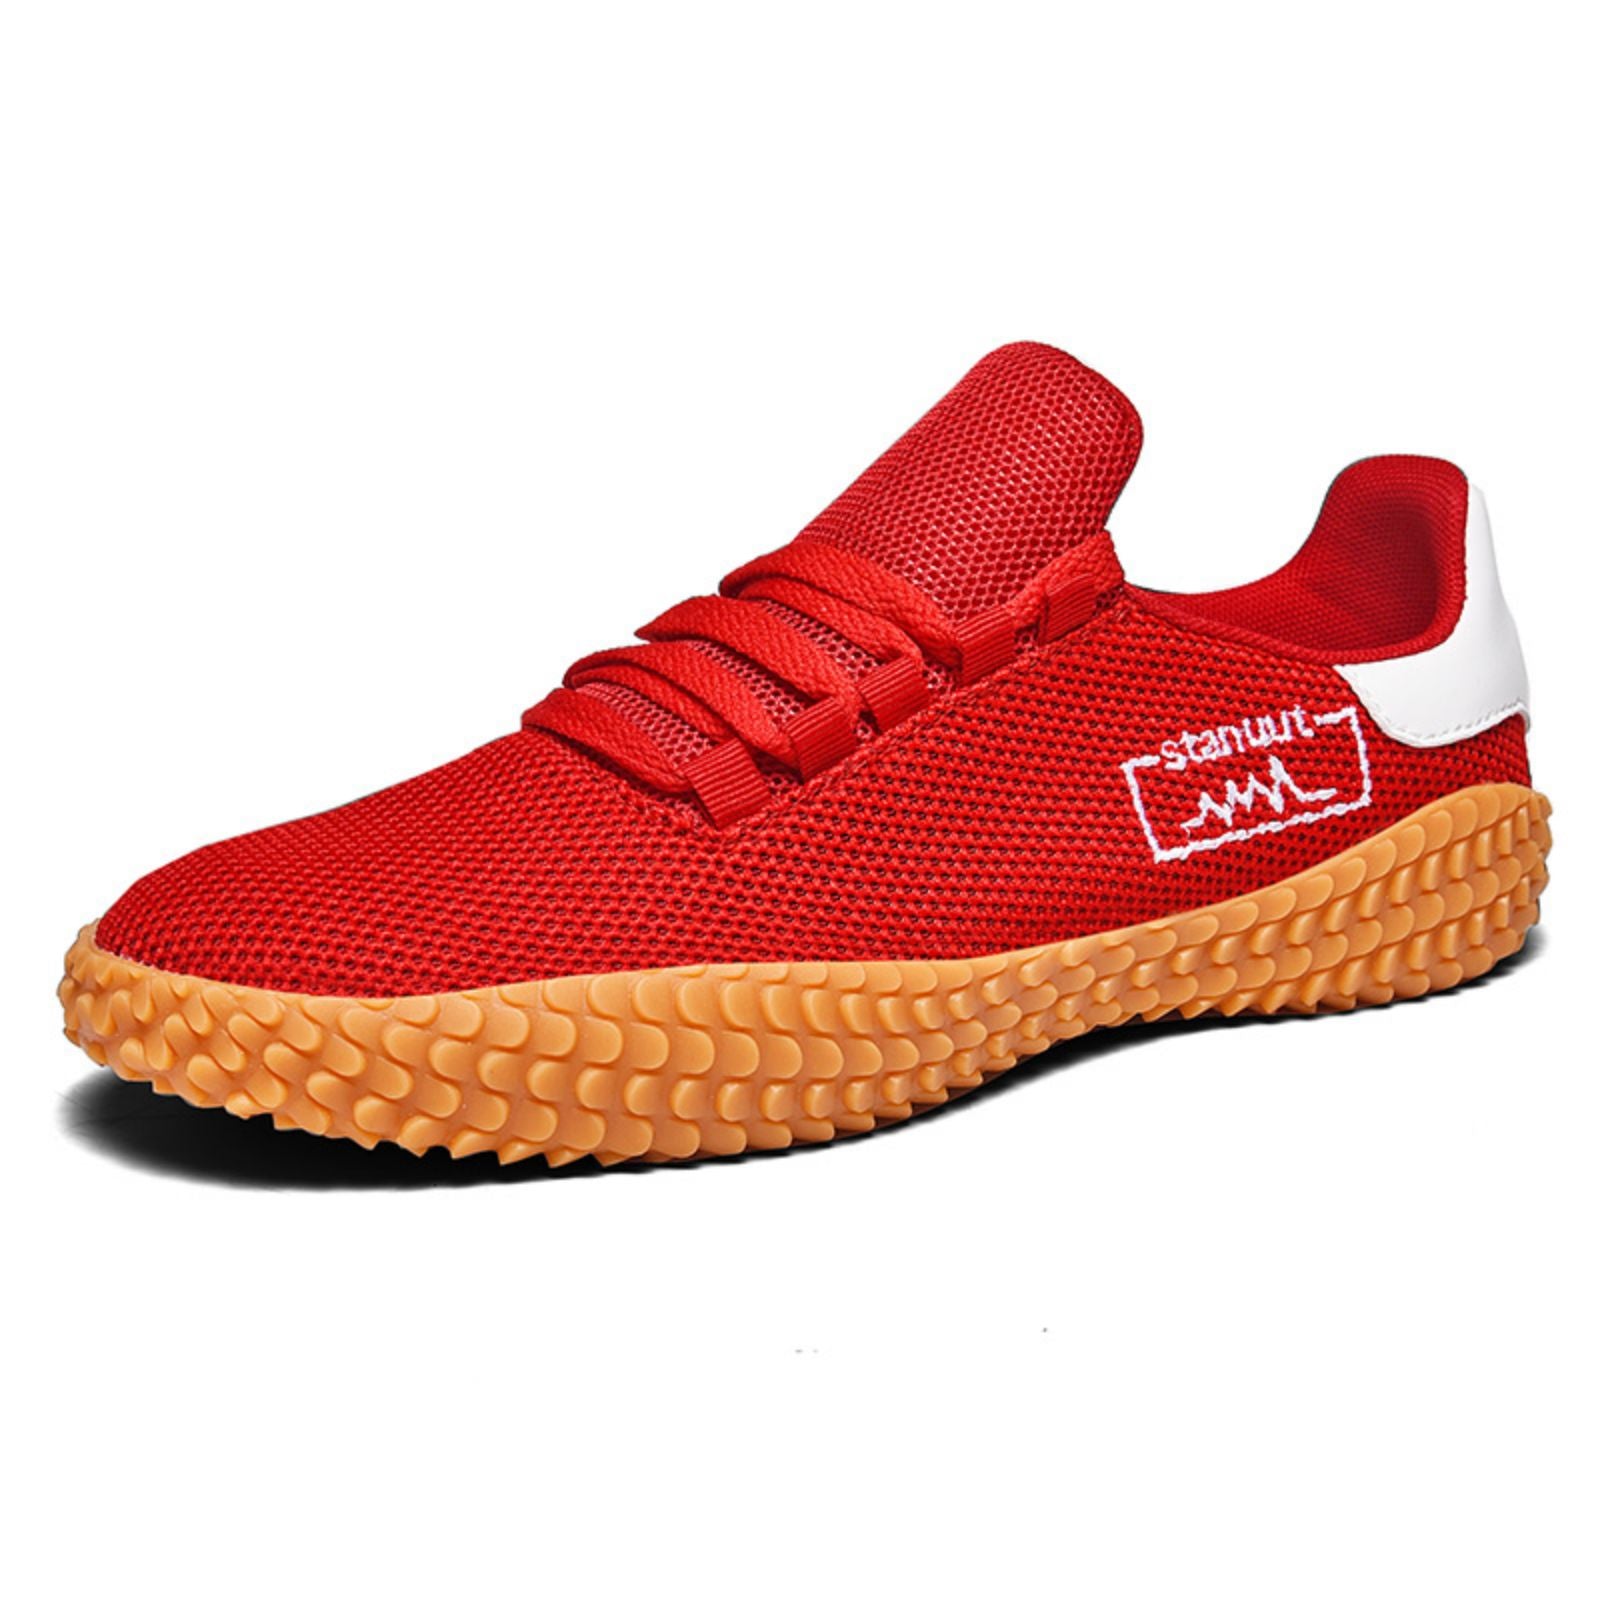 Barefoot Tennis Shoes for Men And Women - Jack's Aqua Sports